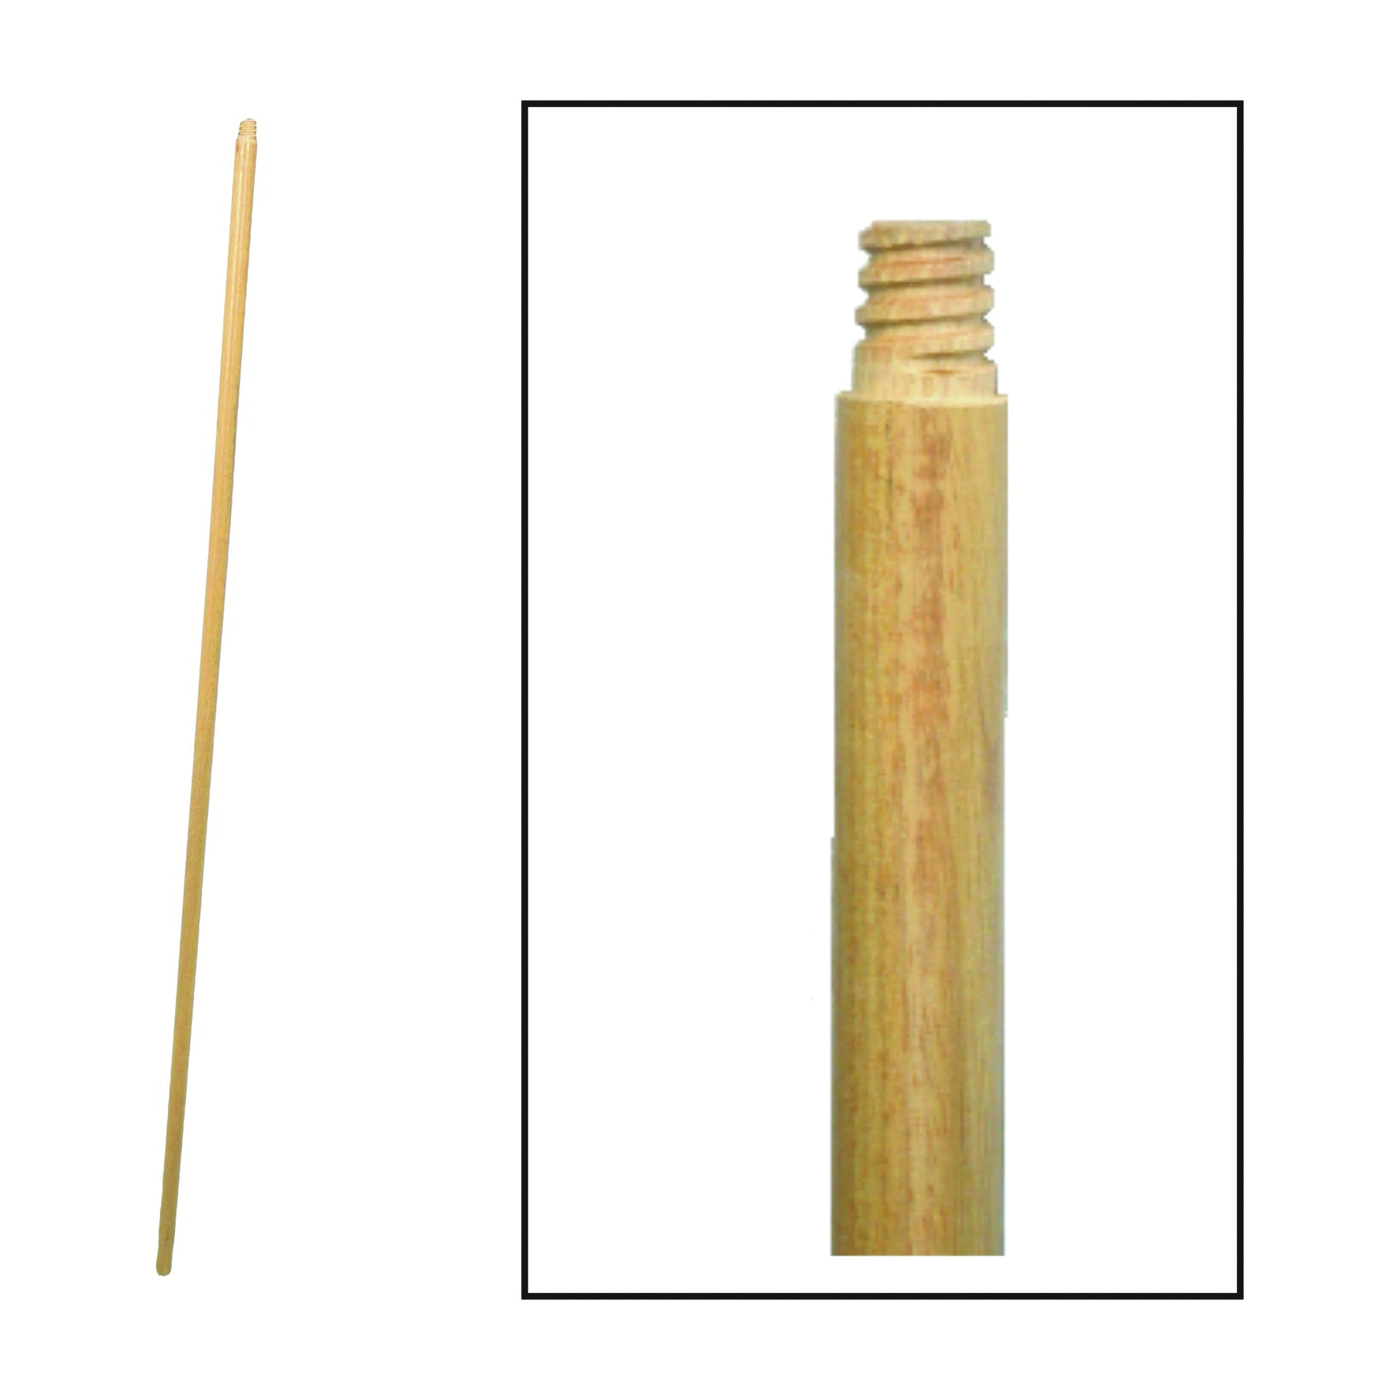 Birdwell 534-12 Broom Handle, 15/16 in Dia, 72 in L, Threaded, Hardwood - 1